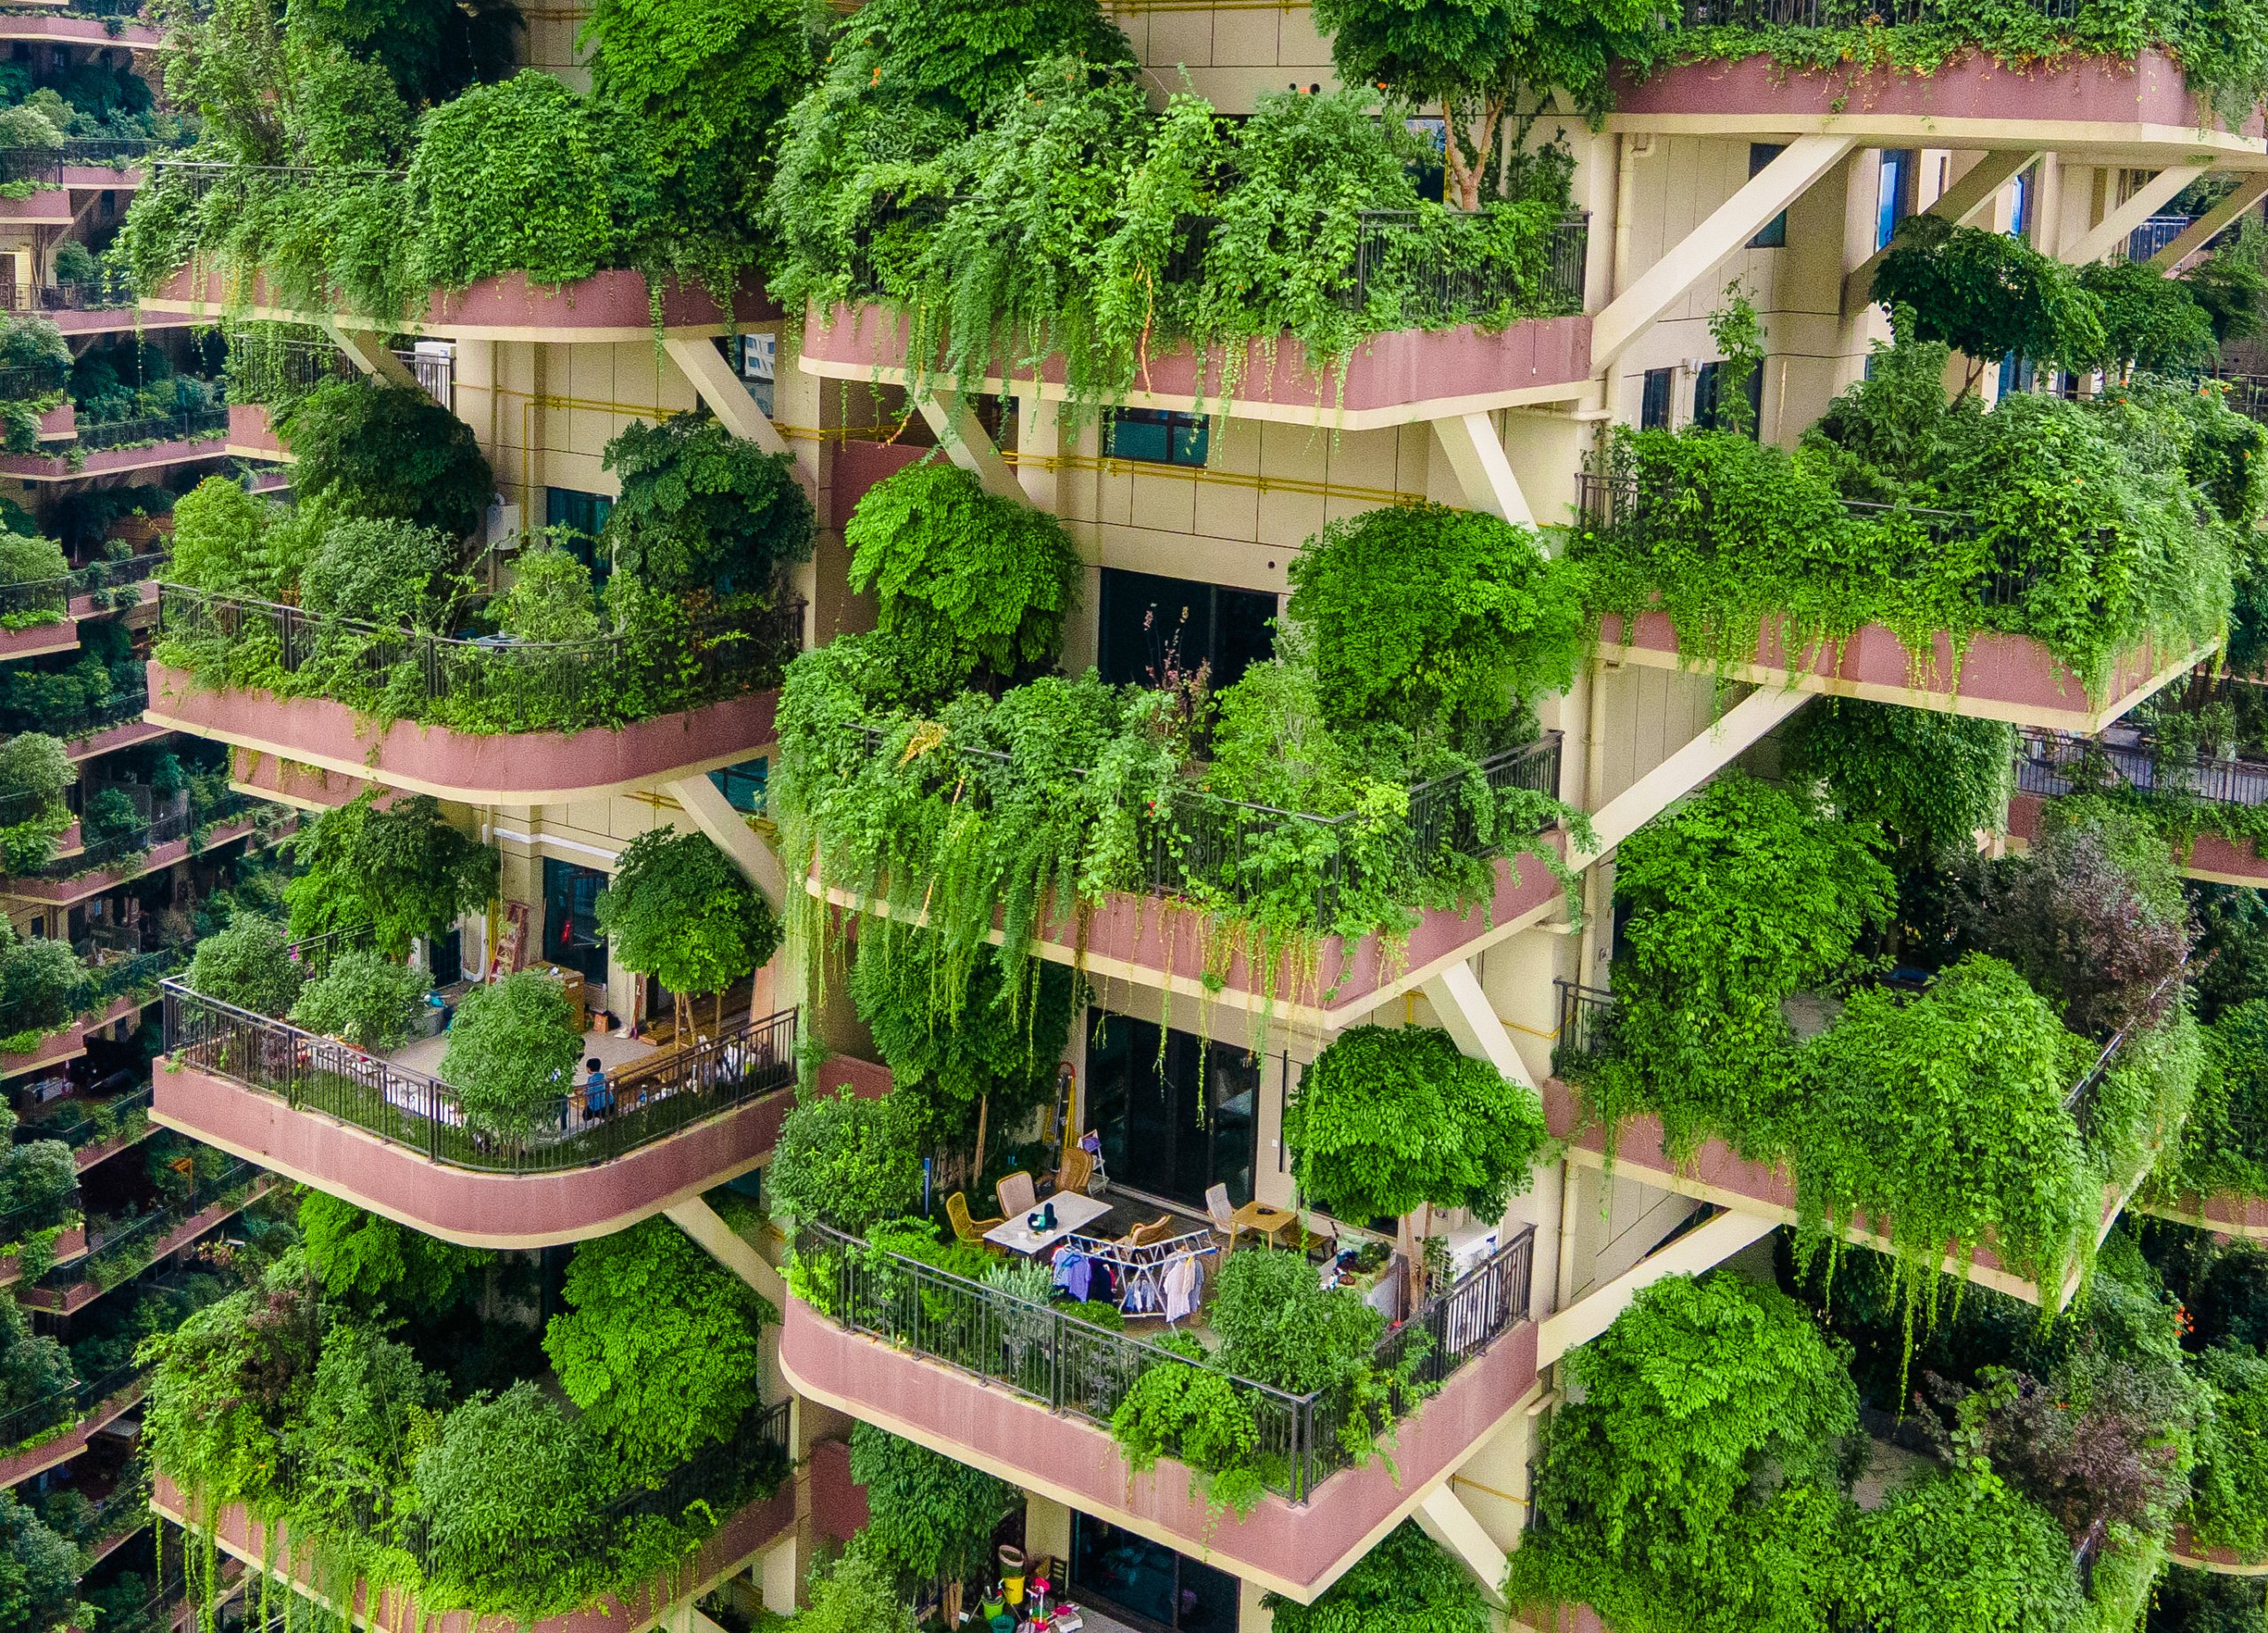 Plants overrun apartment blocks in Chengdu City